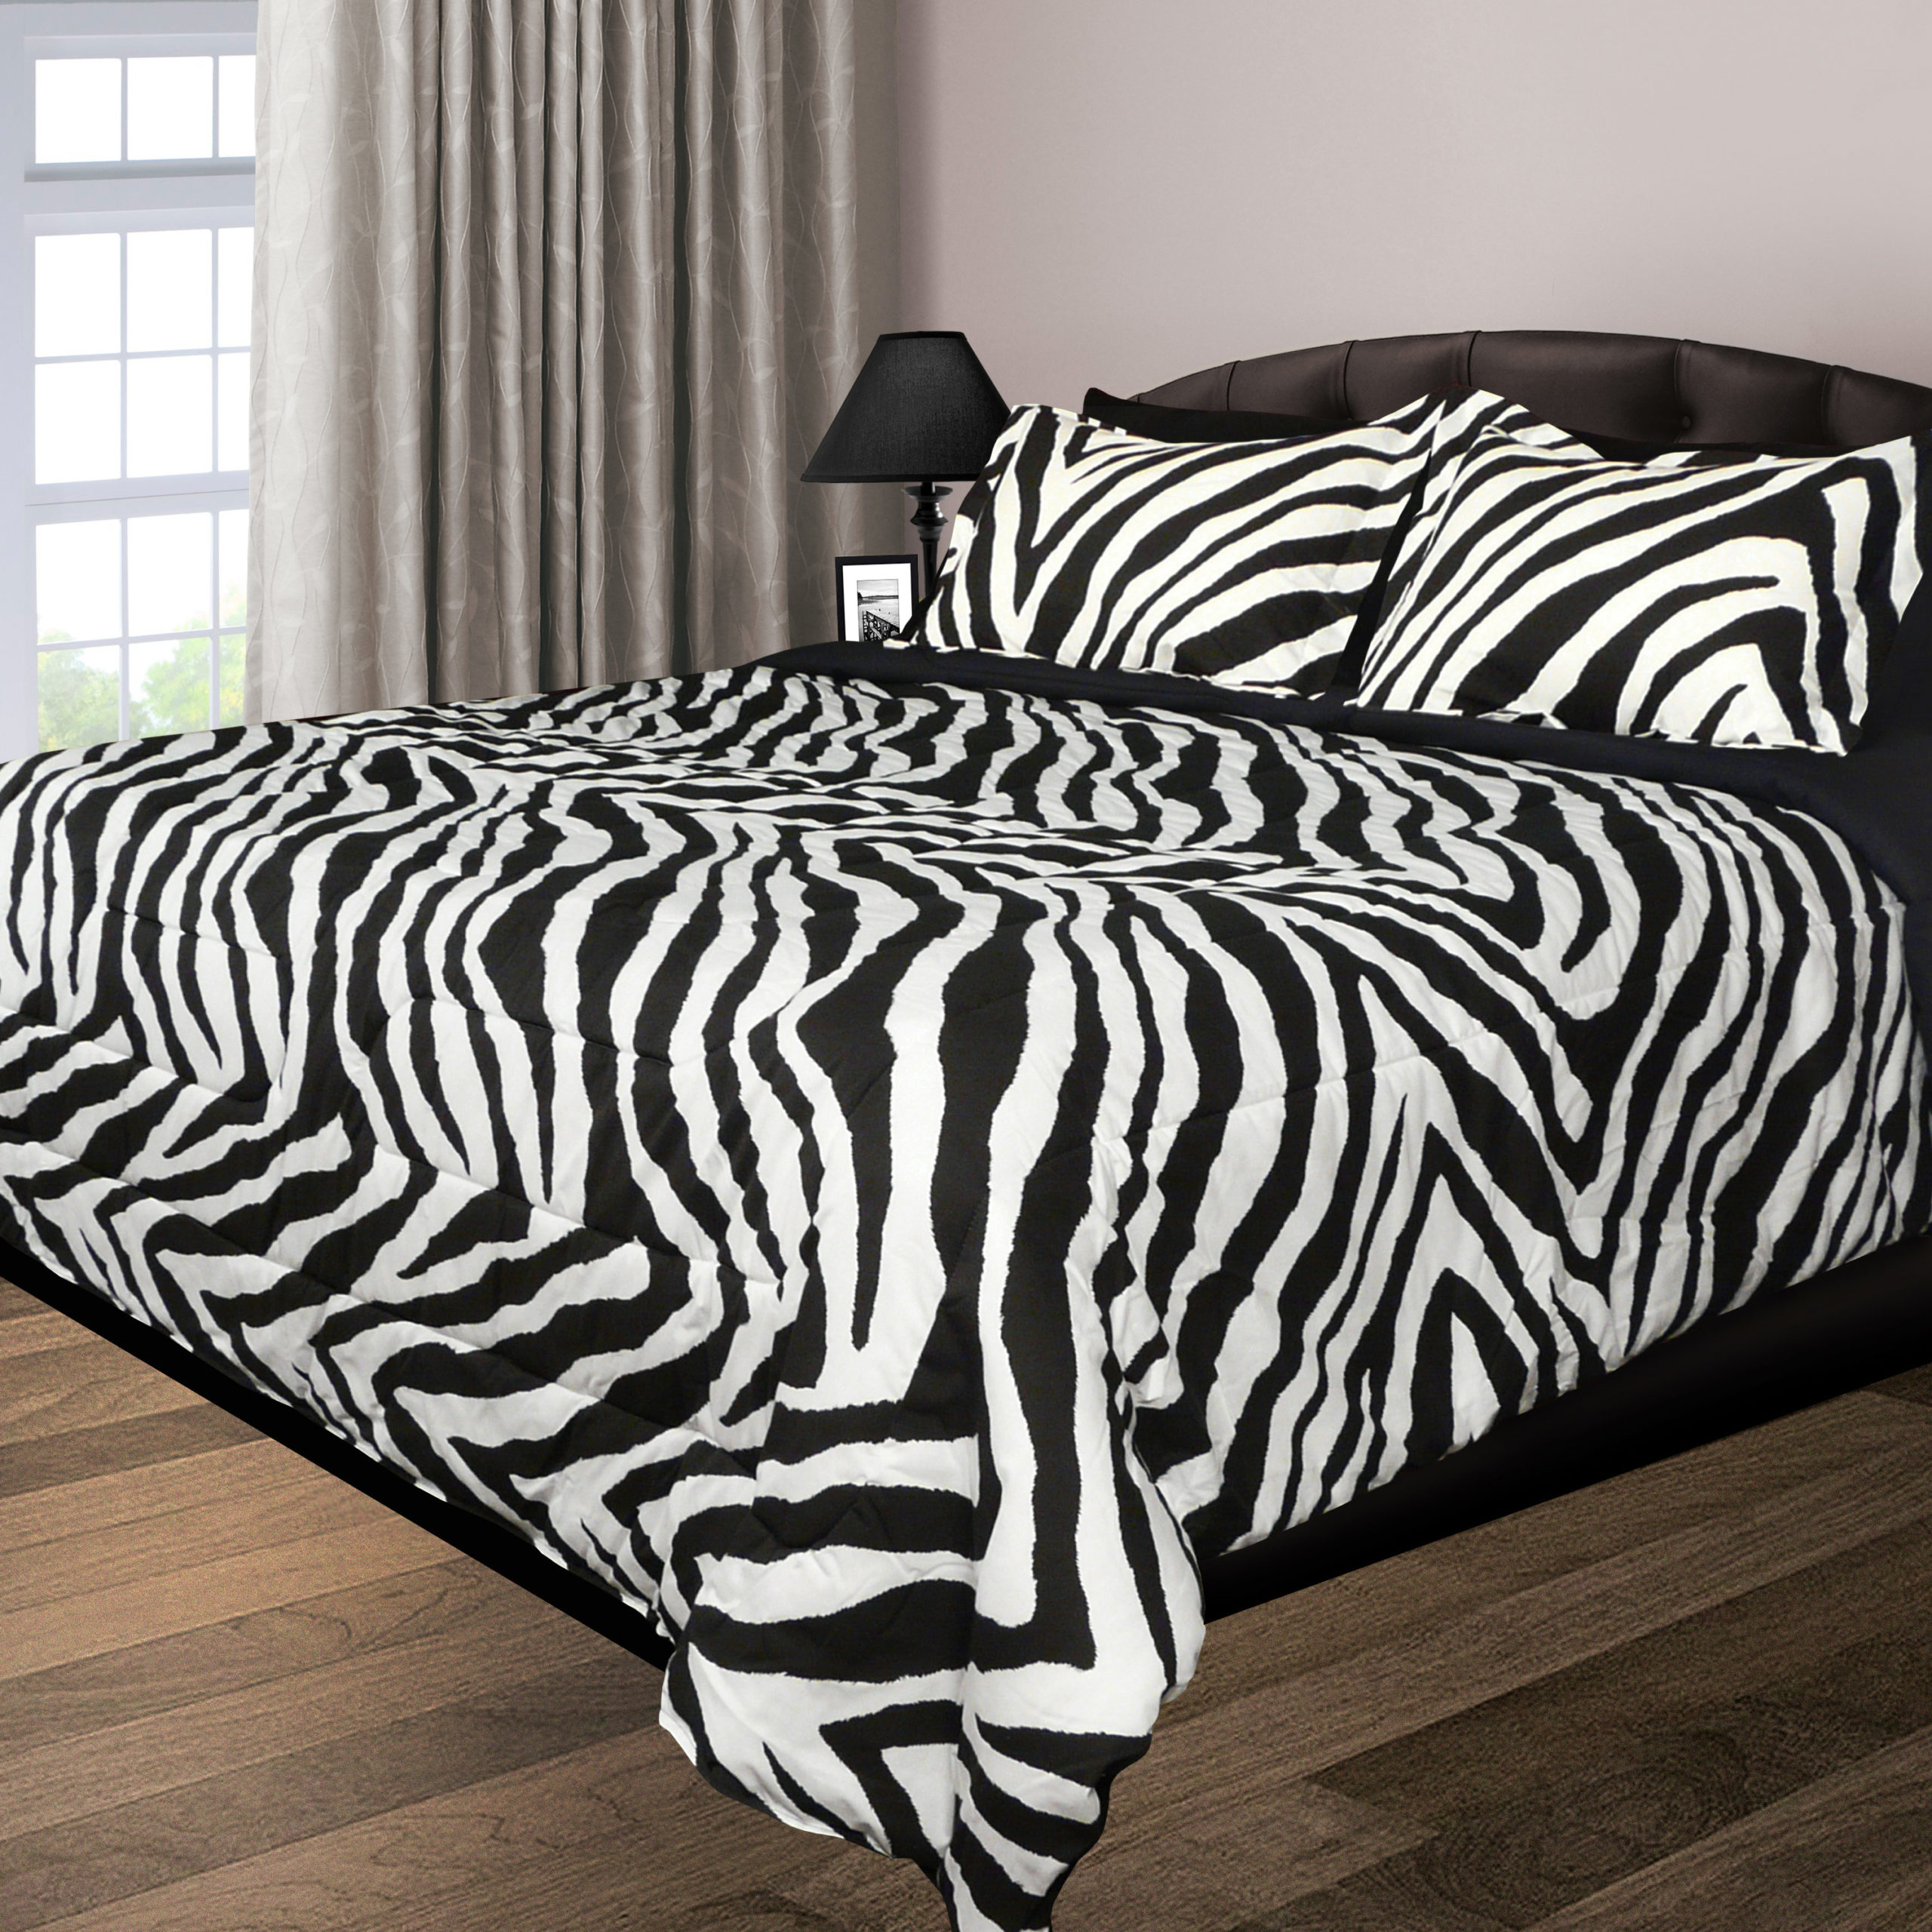 Zebra Pint Beds